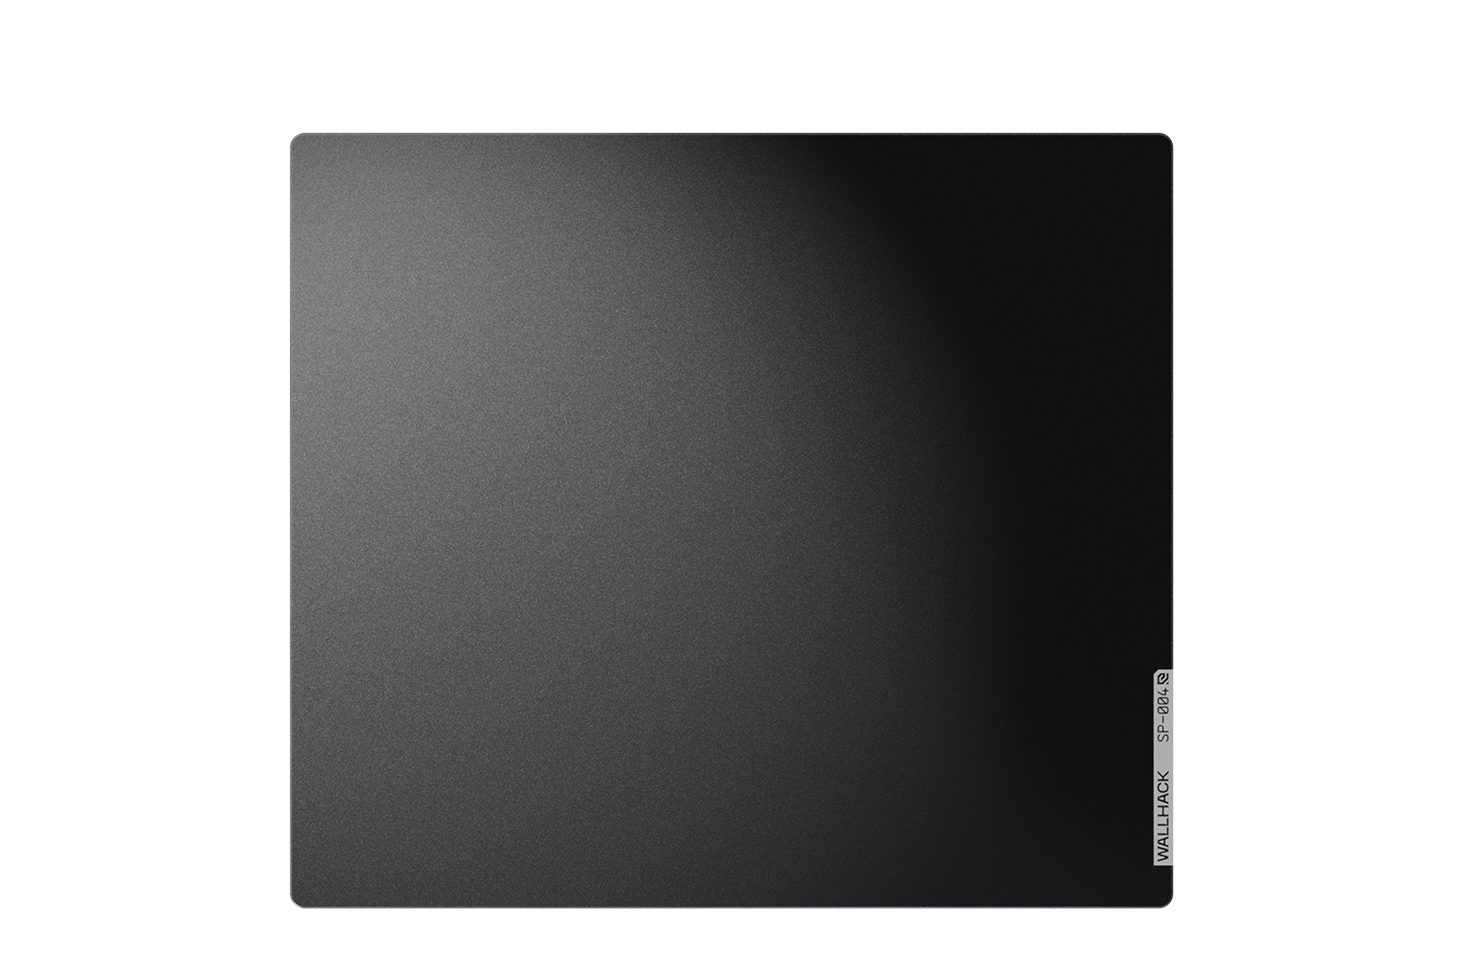 Glasspad SP-004 (Black)